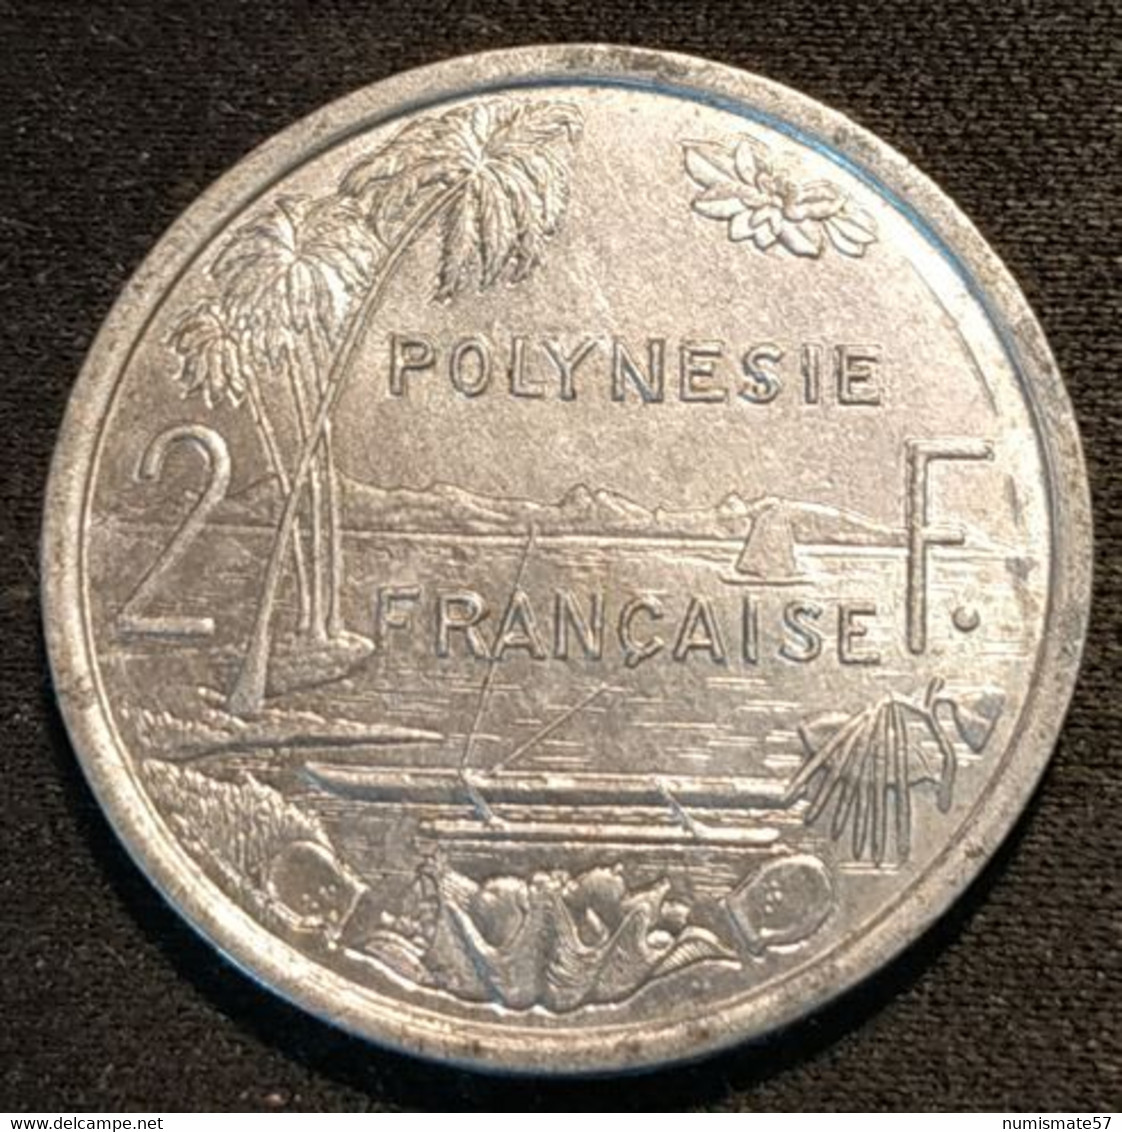 POLYNESIE FRANCAISE - 2 FRANCS 2007 - Avec IEOM - KM 10 - French Polynesia